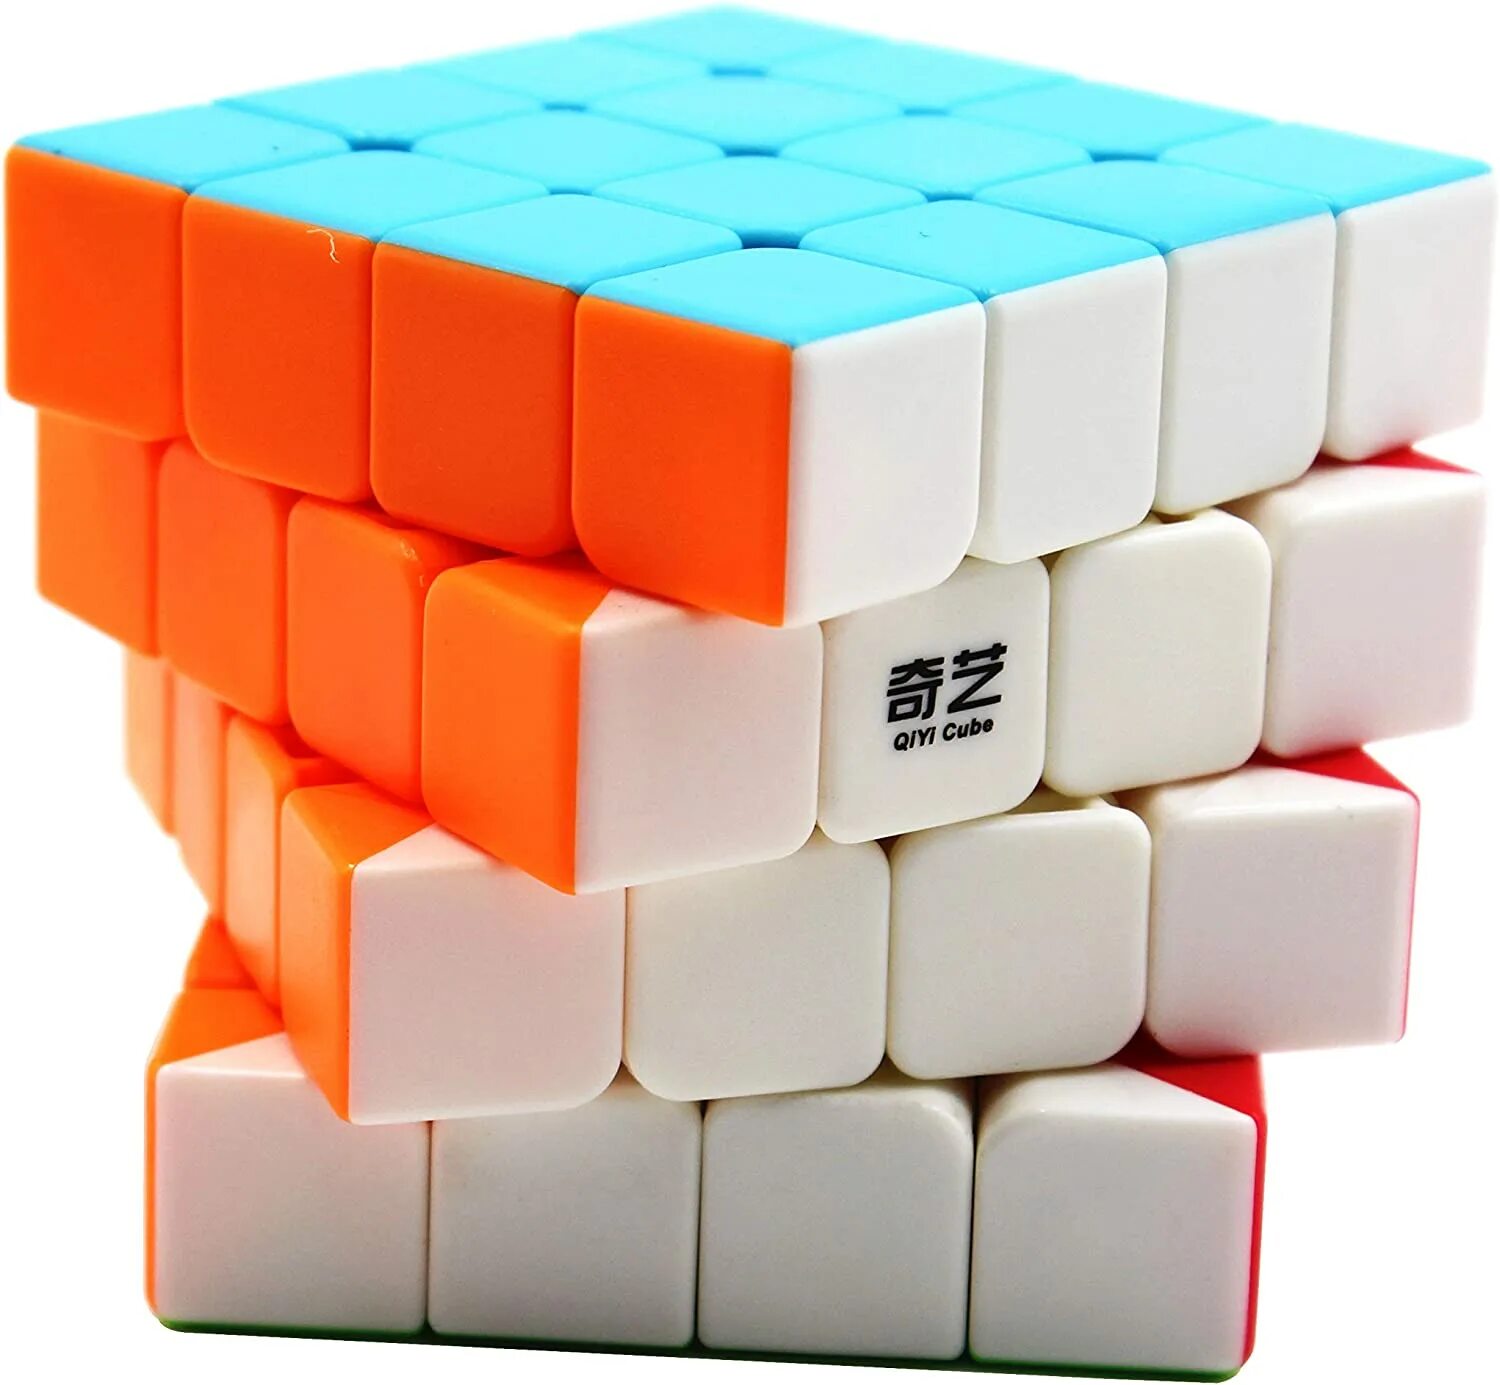 Cube купить спб. Rubic Cube 4x6. Кубик Рубика 4x4. 4x4 Cube. Куб 4х4х4.